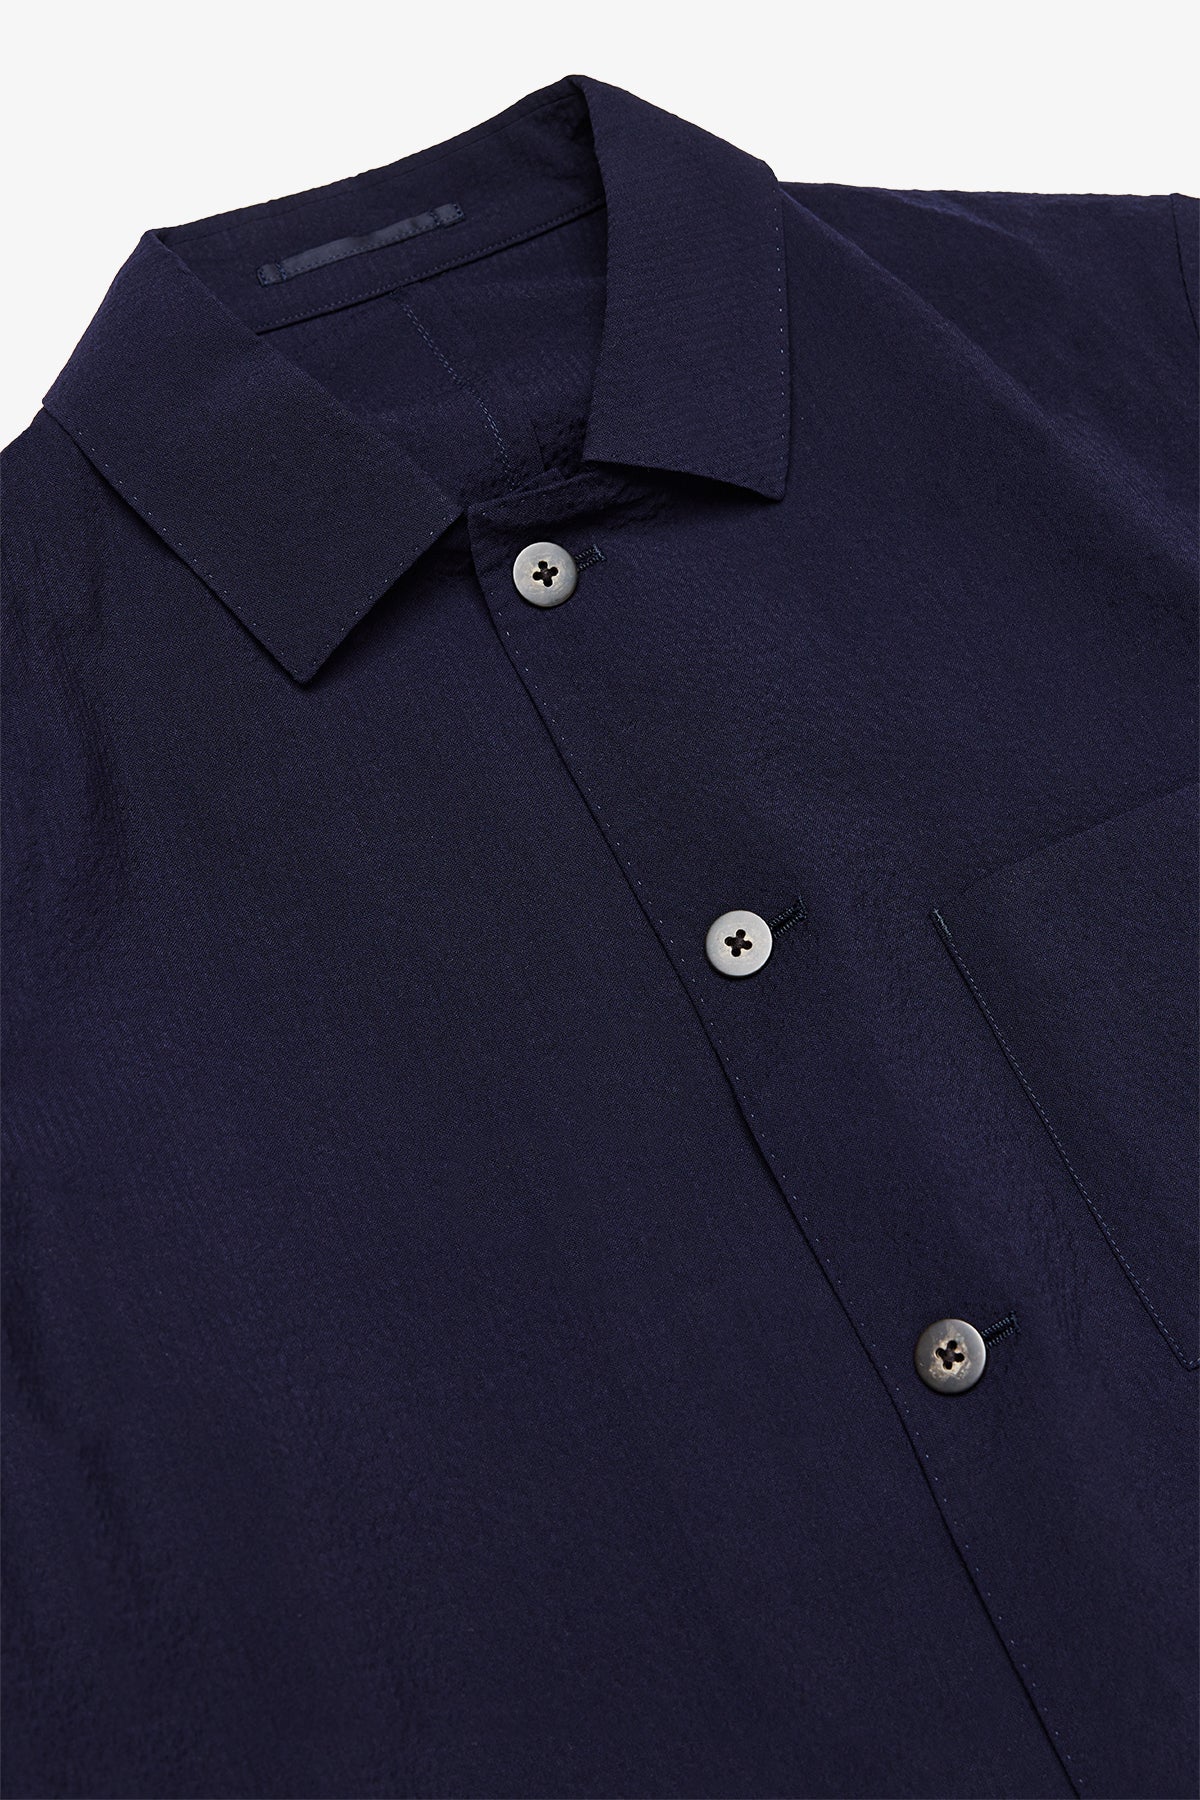 Arienzo - Navy Shirt Jacket